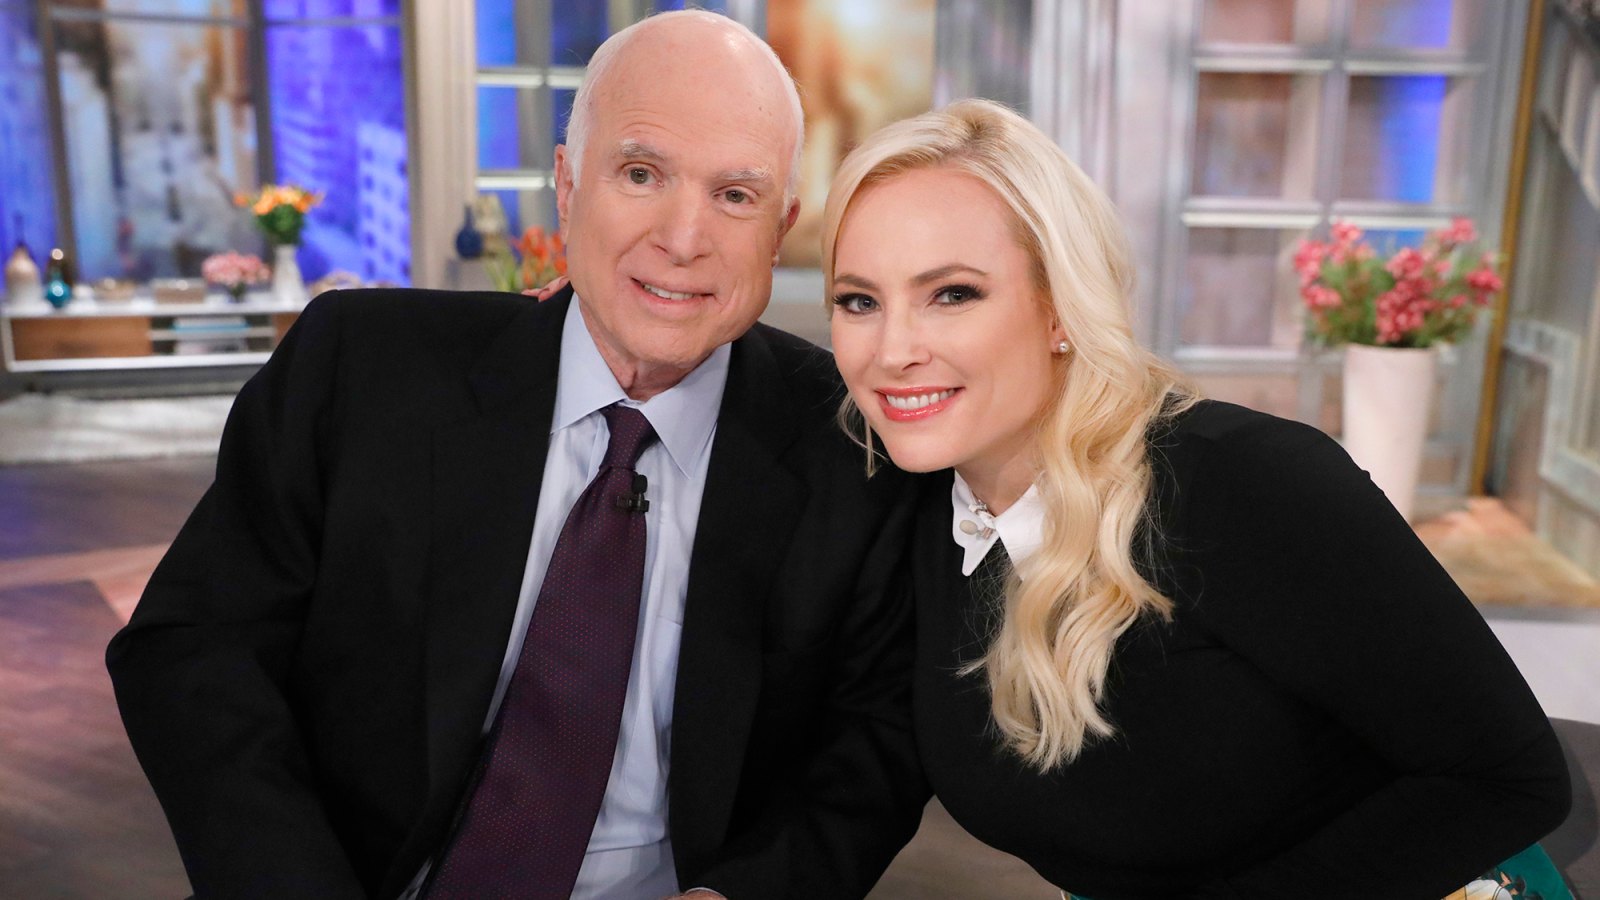 Senator John McCain and daughter, Meghan McCain